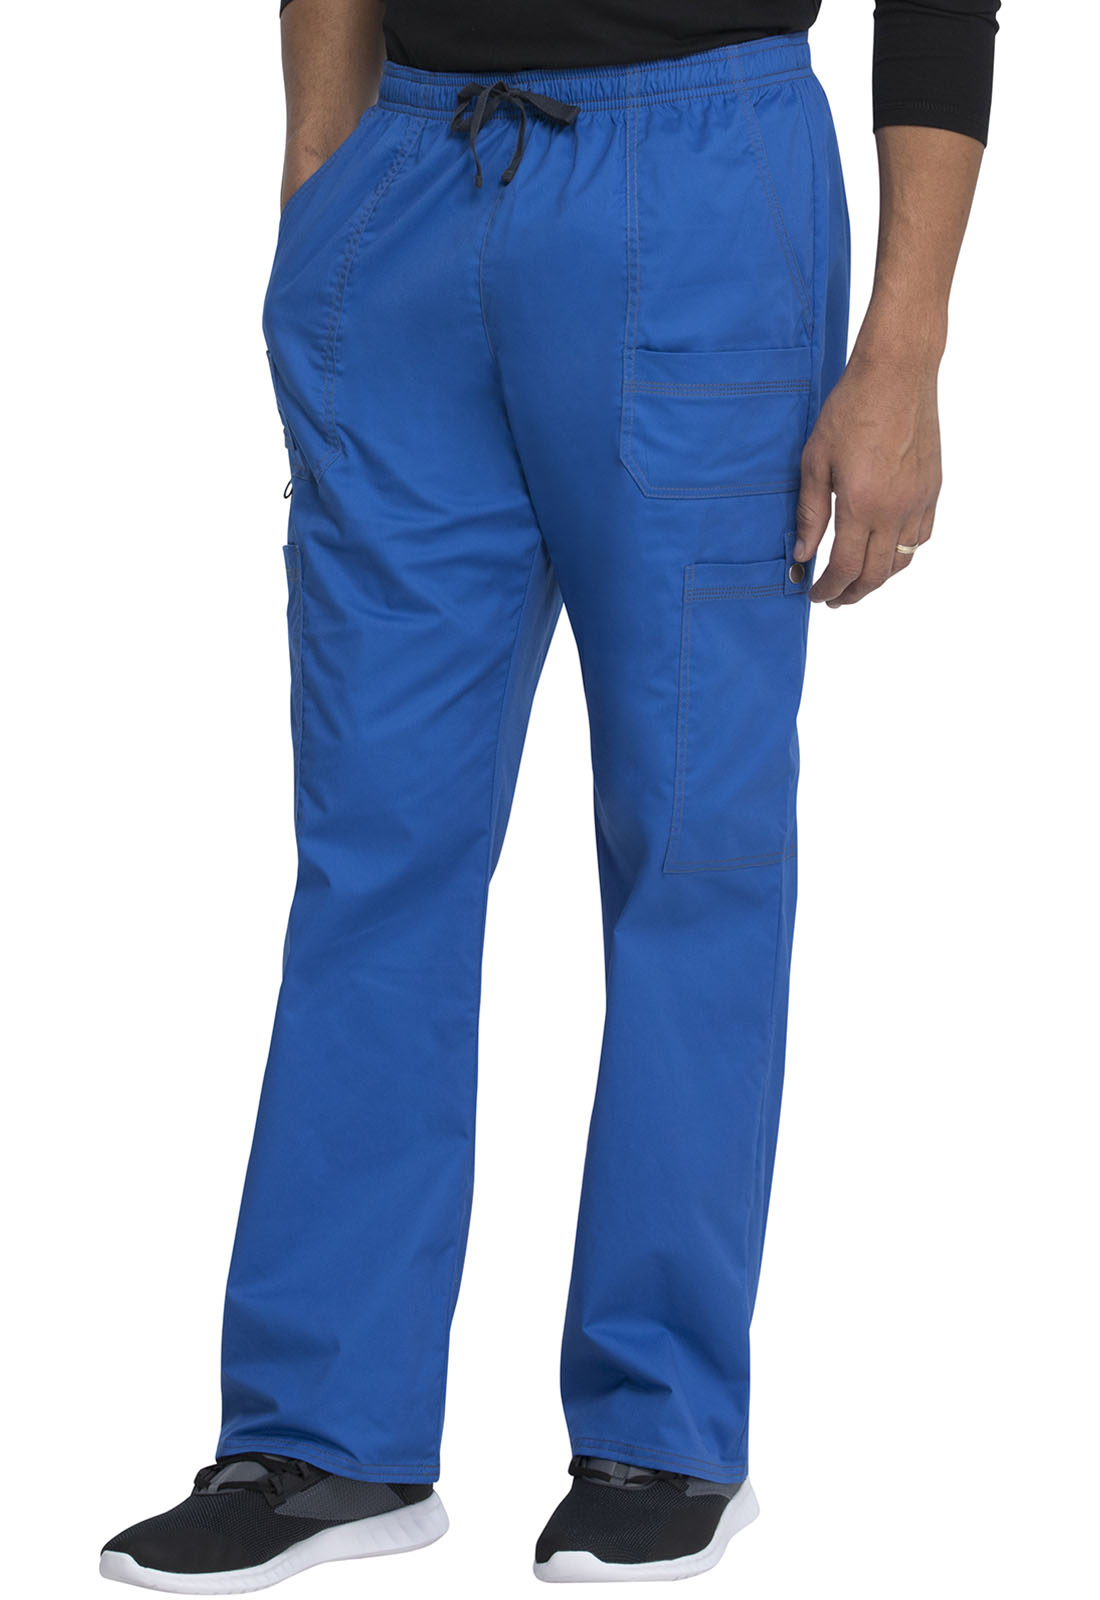 NUEVOS Pantalones para Teléfono Celular Dickies® (bolsillo Multiuso) - 35W  x 37L (sin dobladillos) - Caqui